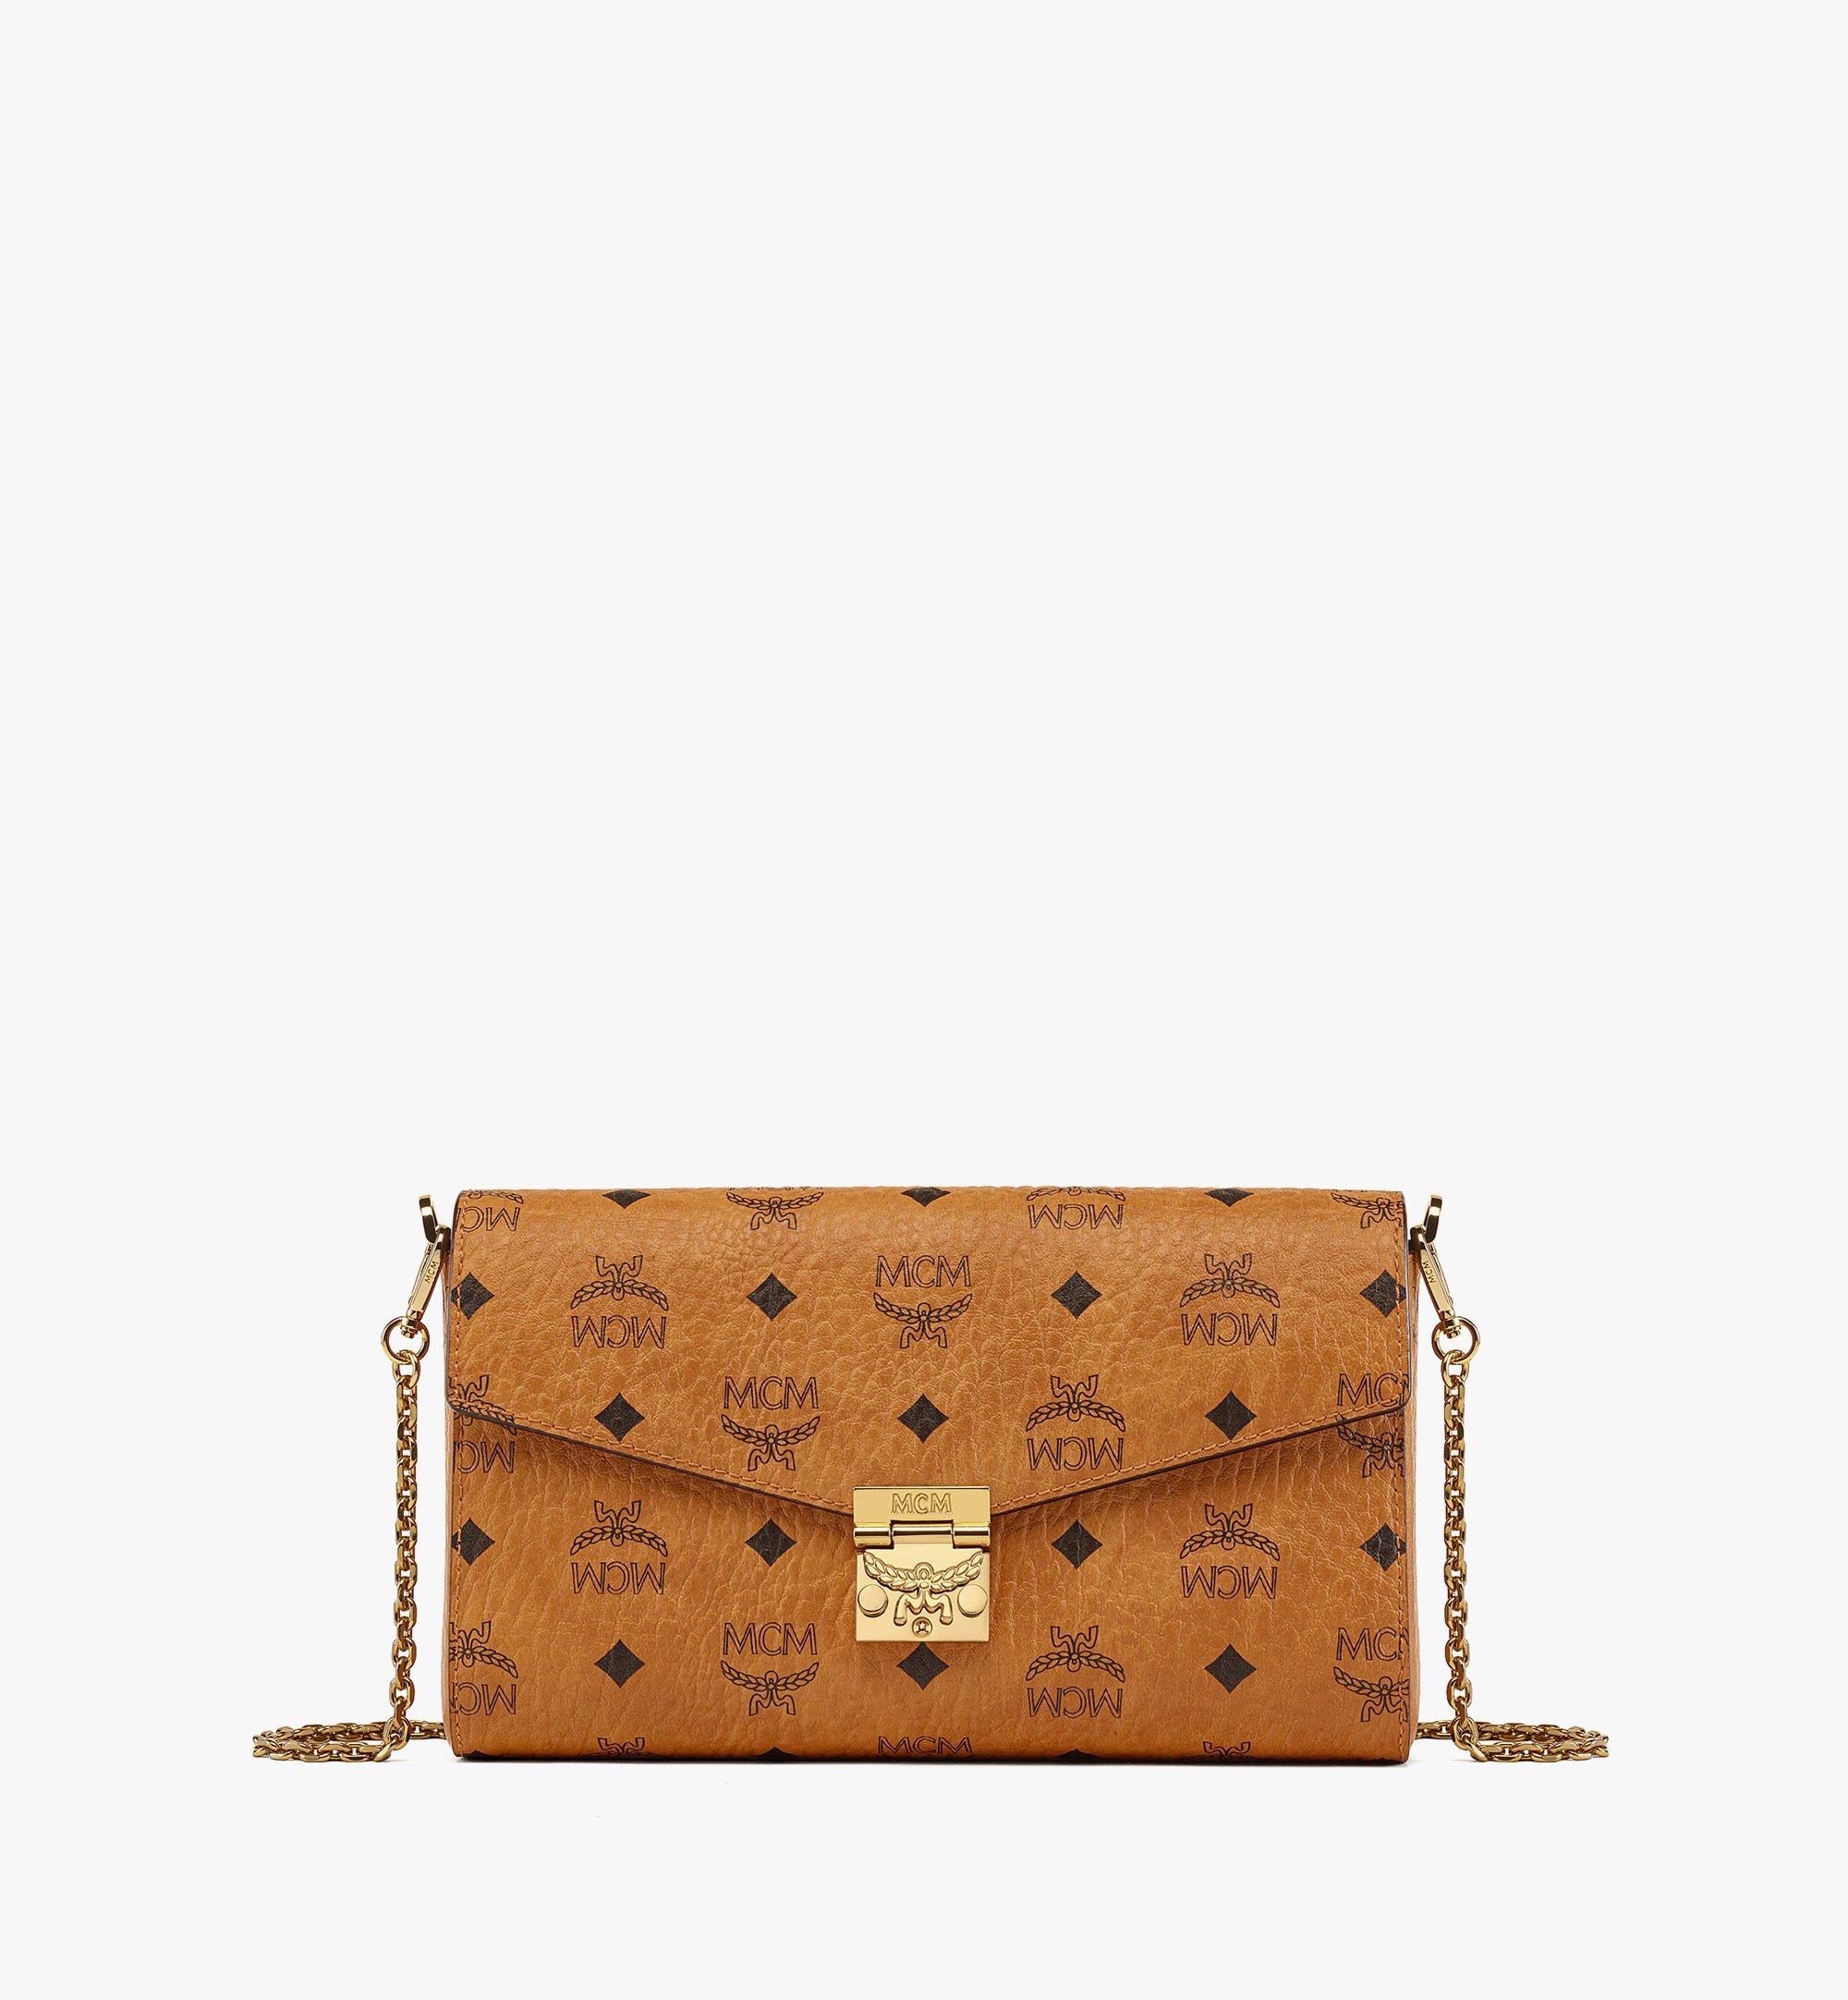 Mcm Authenticated Millie Leather Handbag